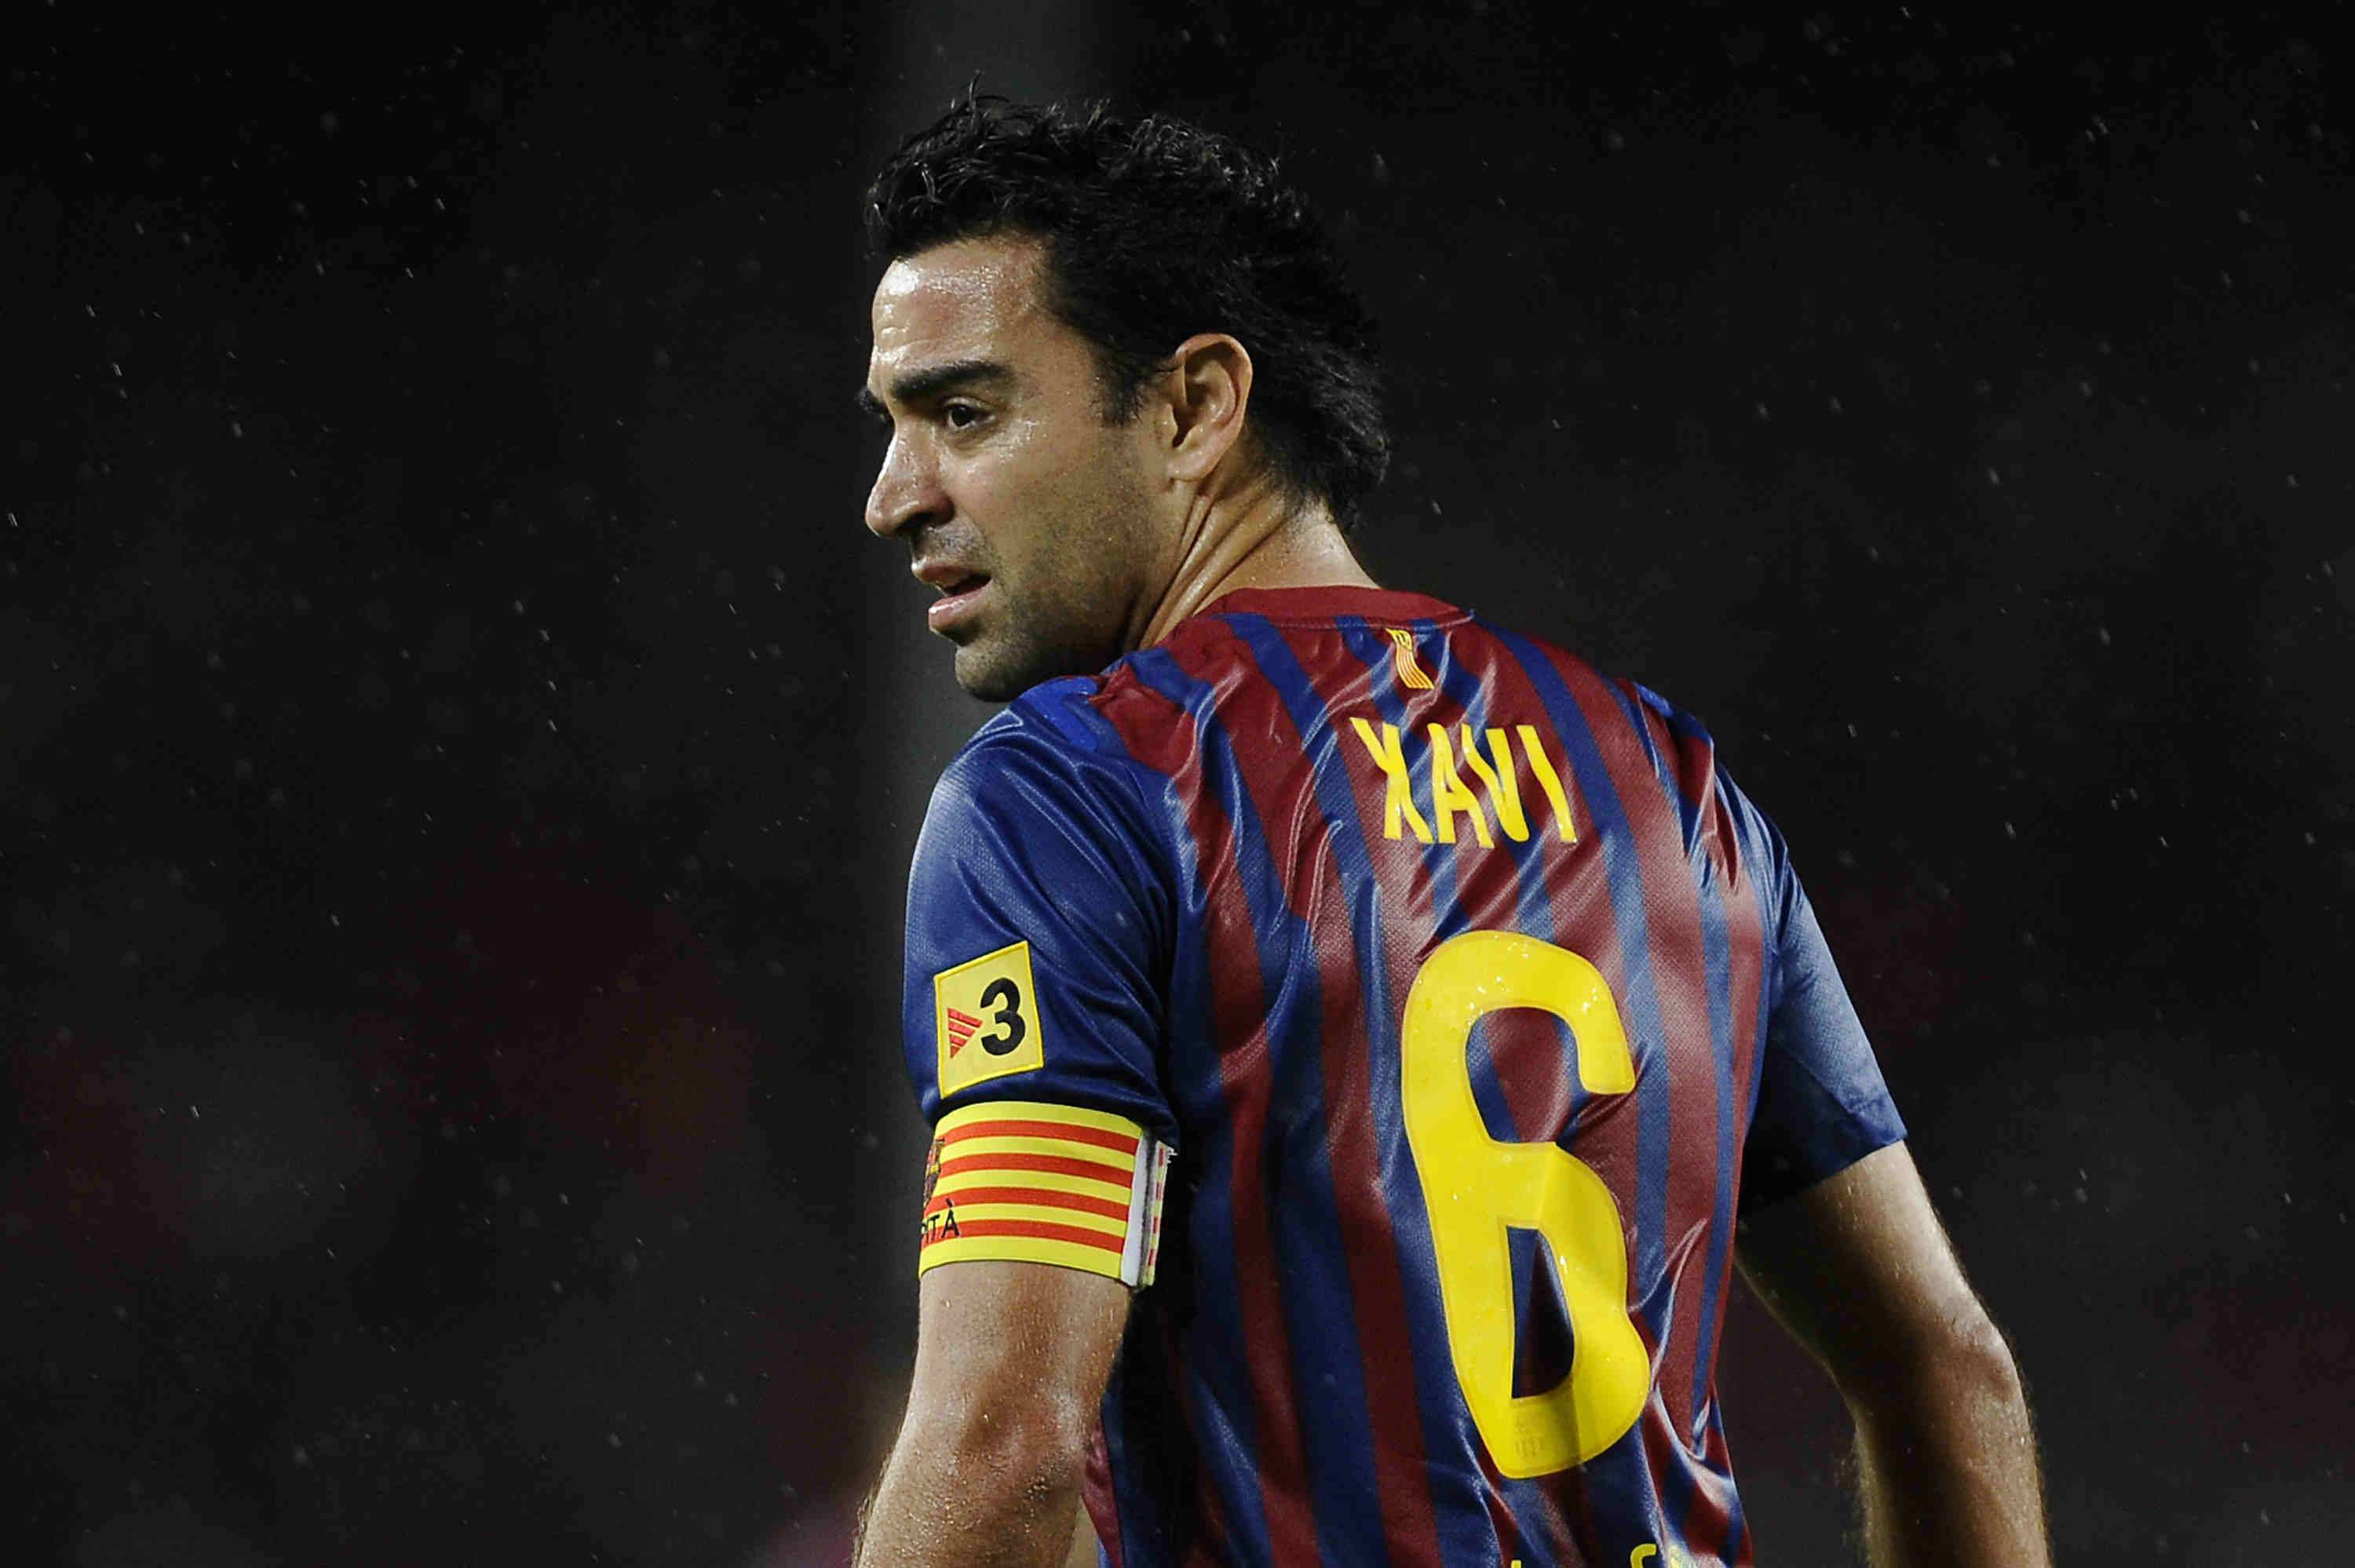 The player of Barcelona Xavi Hernandez wallpaper and image